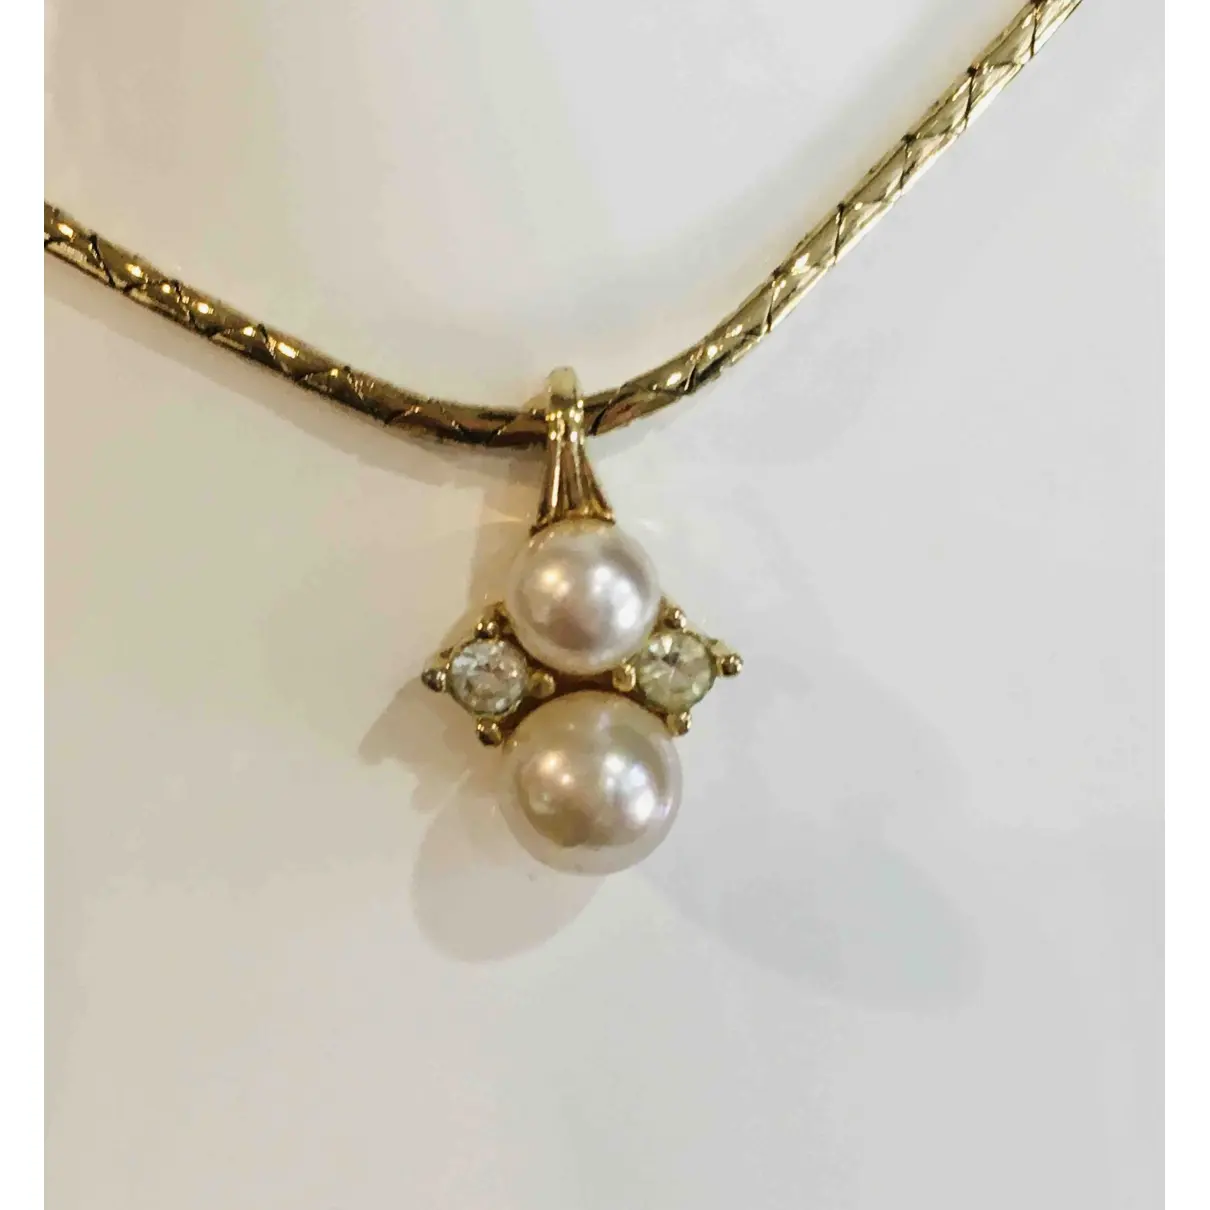 Buy Dior Necklace online